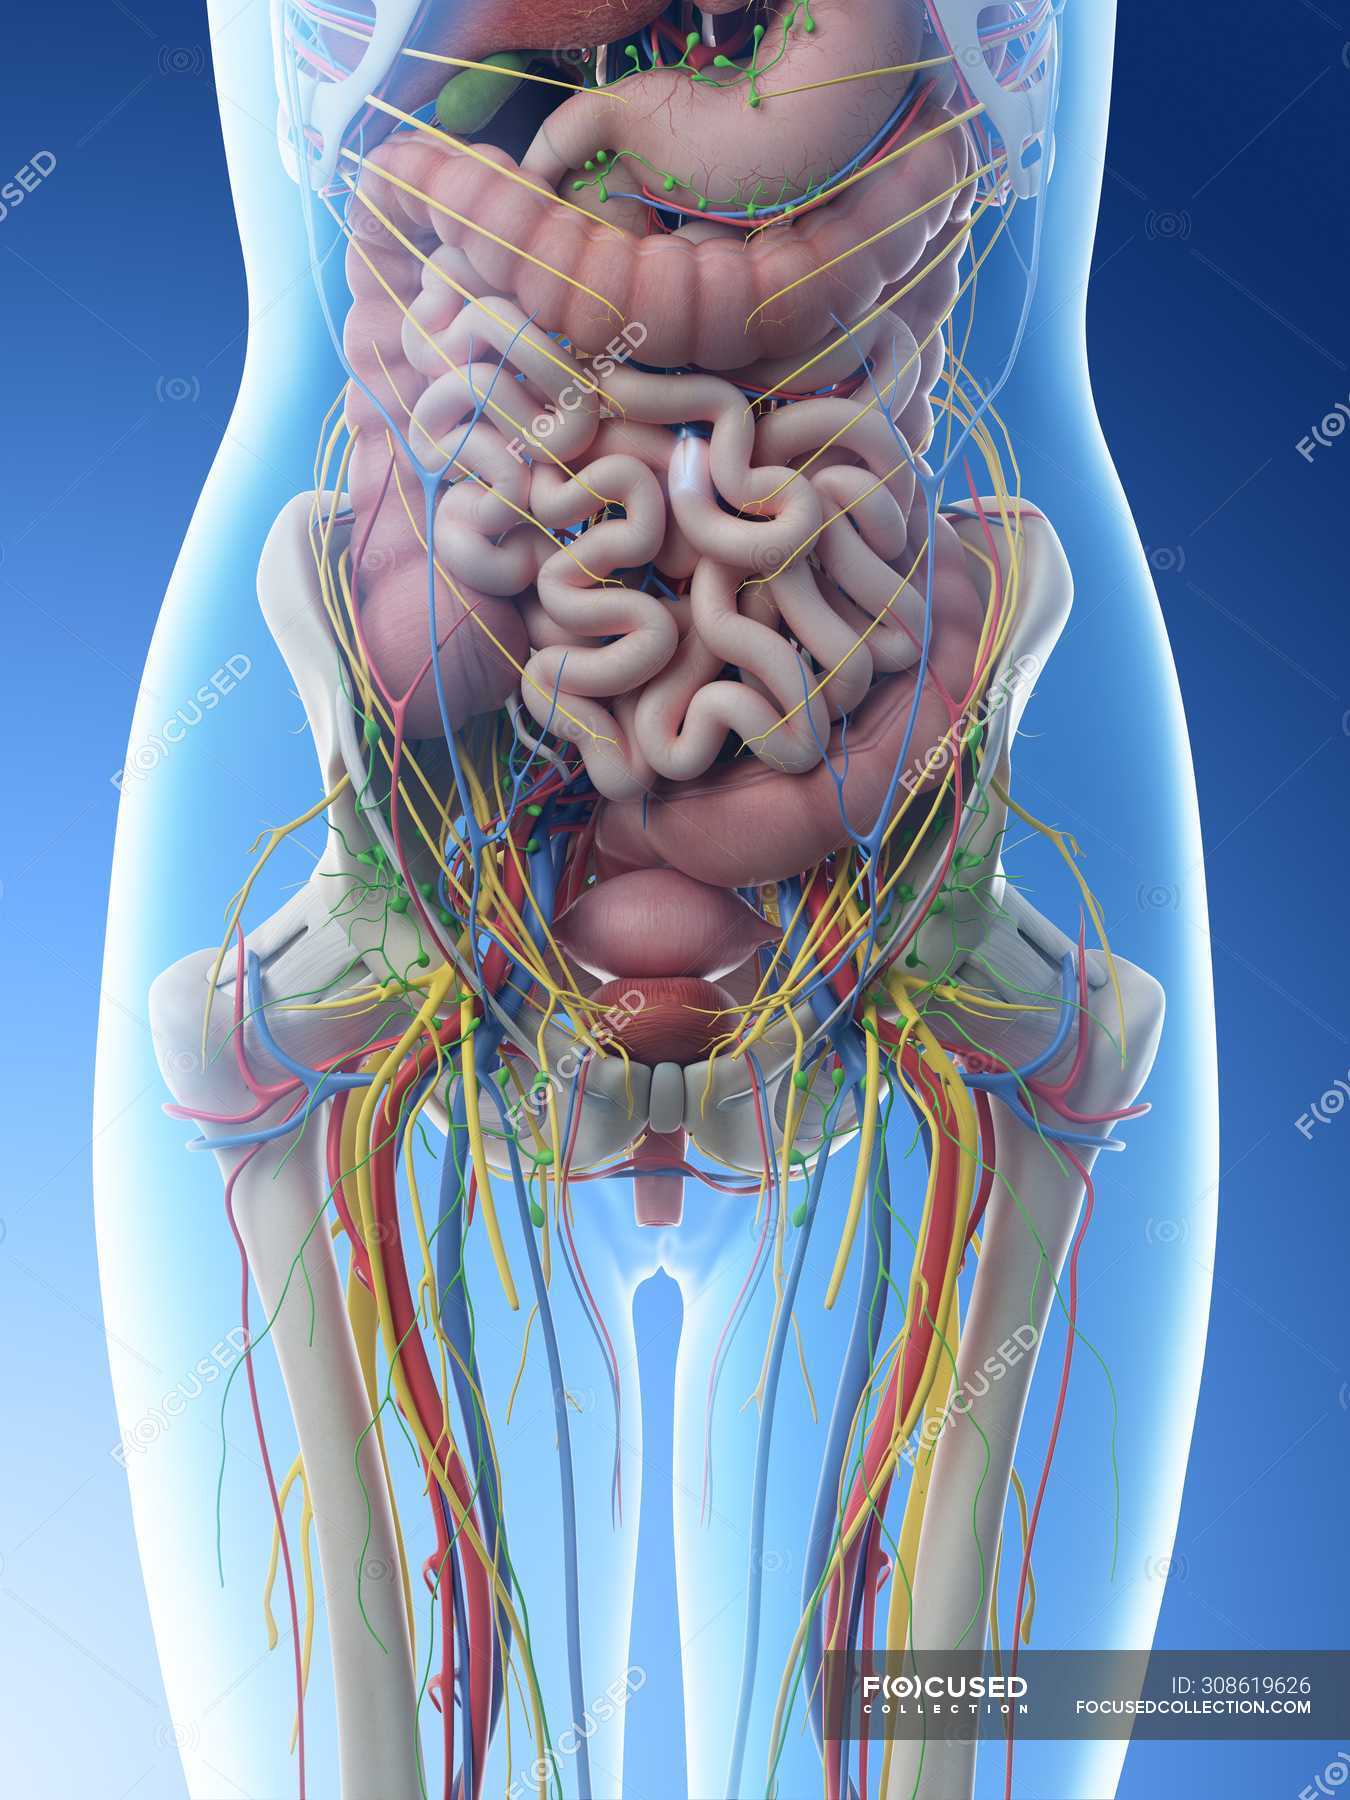 Female Abdominal Anatomy And Internal Organs Computer Illustration Blue Background Human Anatomy Stock Photo 308619626